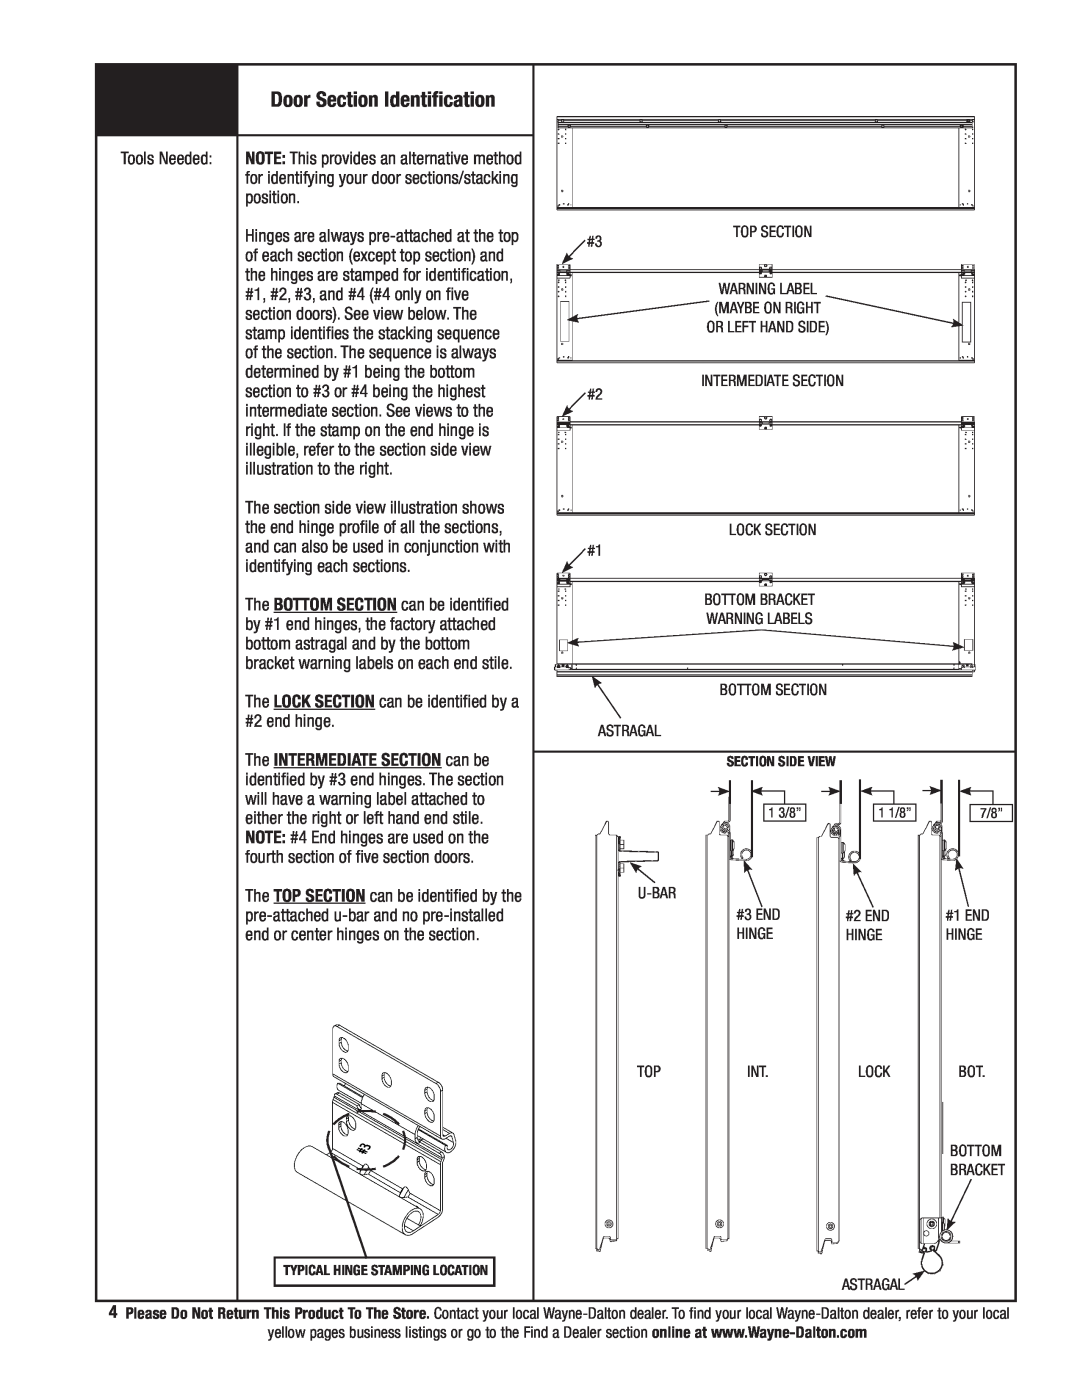 Wayne-Dalton 9800 installation instructions Door Section Identification 